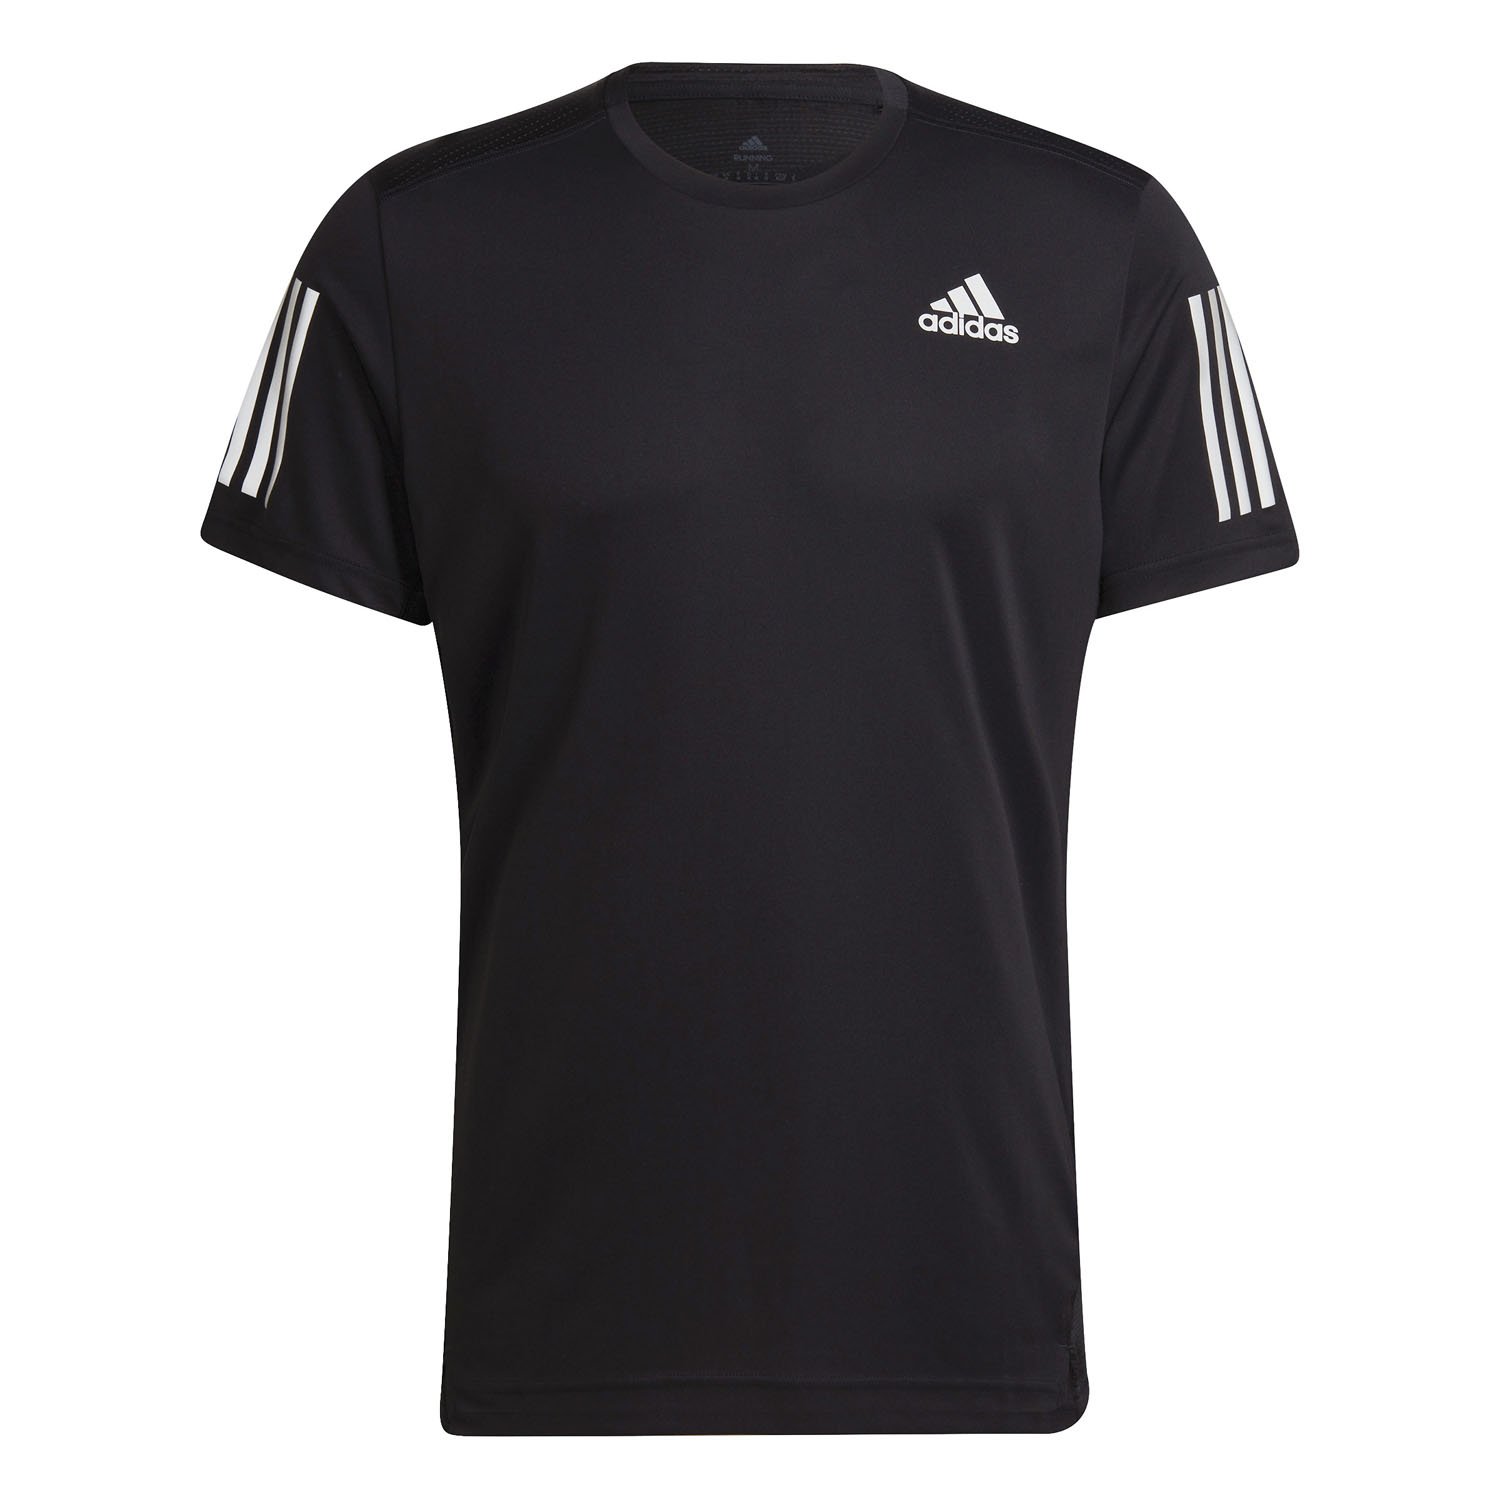 Adidas Own The Run Erkek Koşu Tişörtü - Siyah - 1